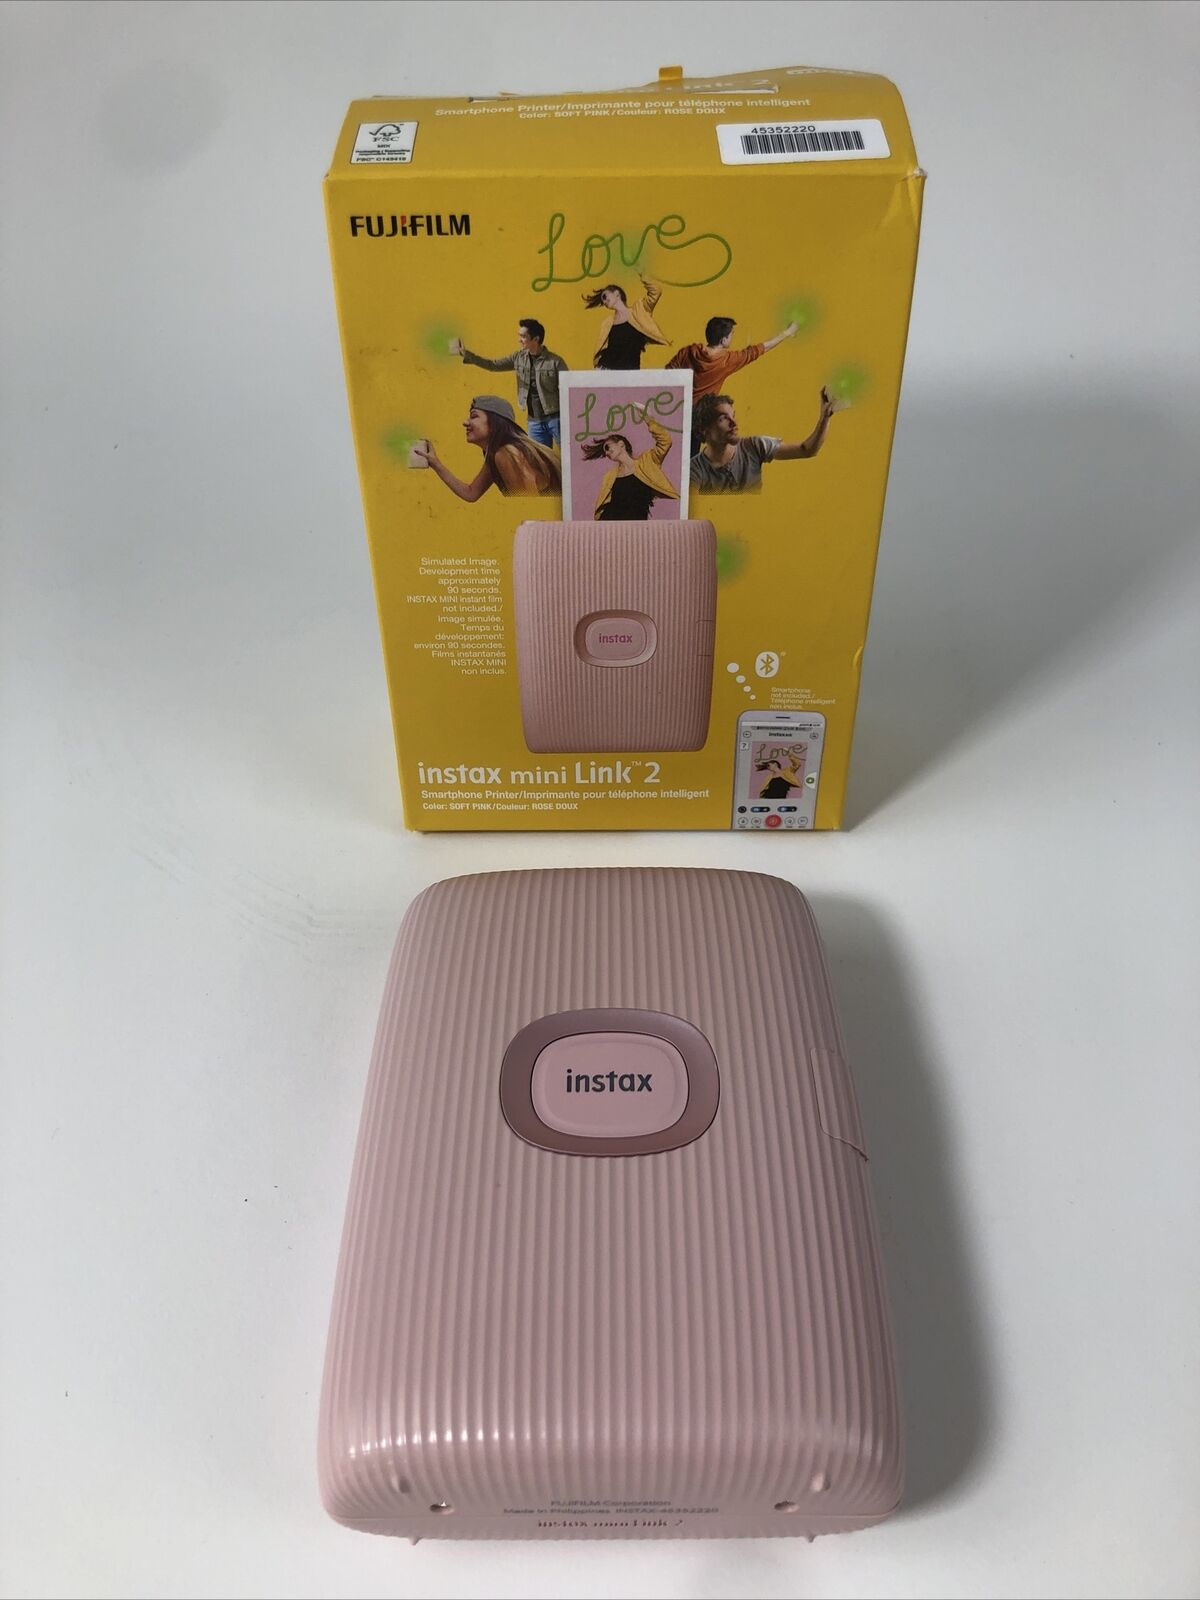 Fujifilm - Instax Mini Link 2 - Wireless Photo Printer - Pink